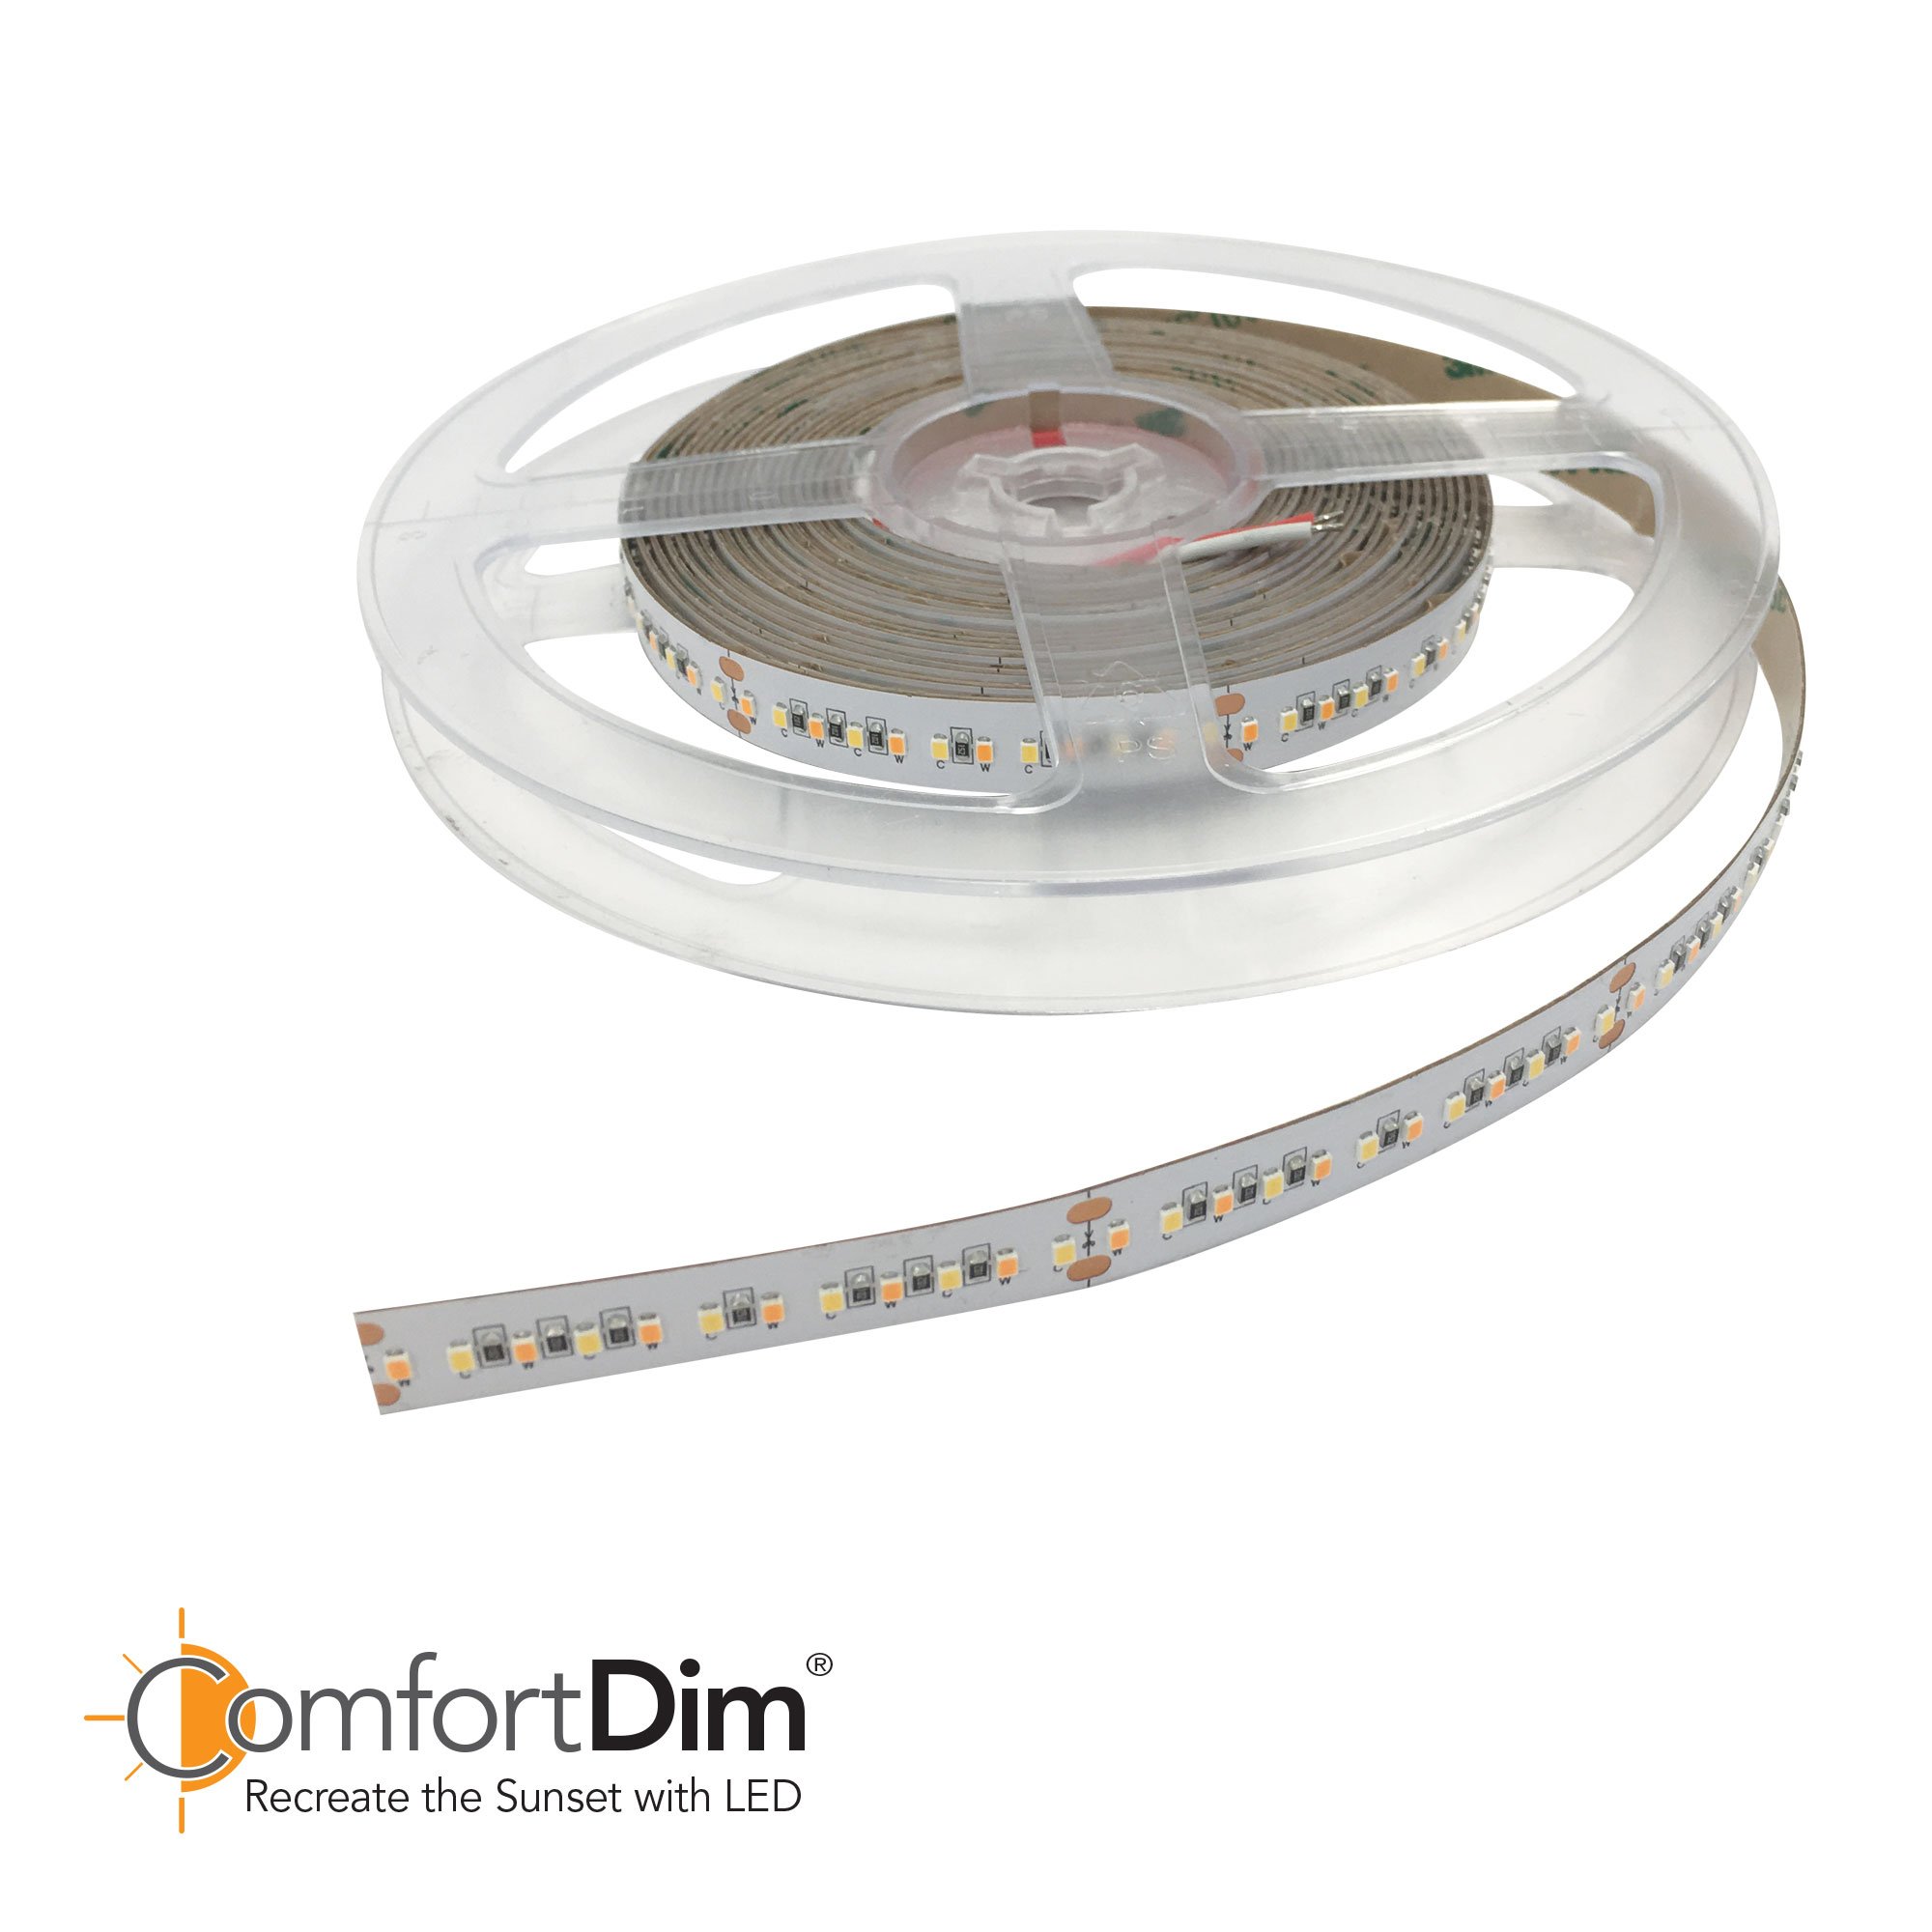 24V Comfort Dim Tape Light - 170lm per foot